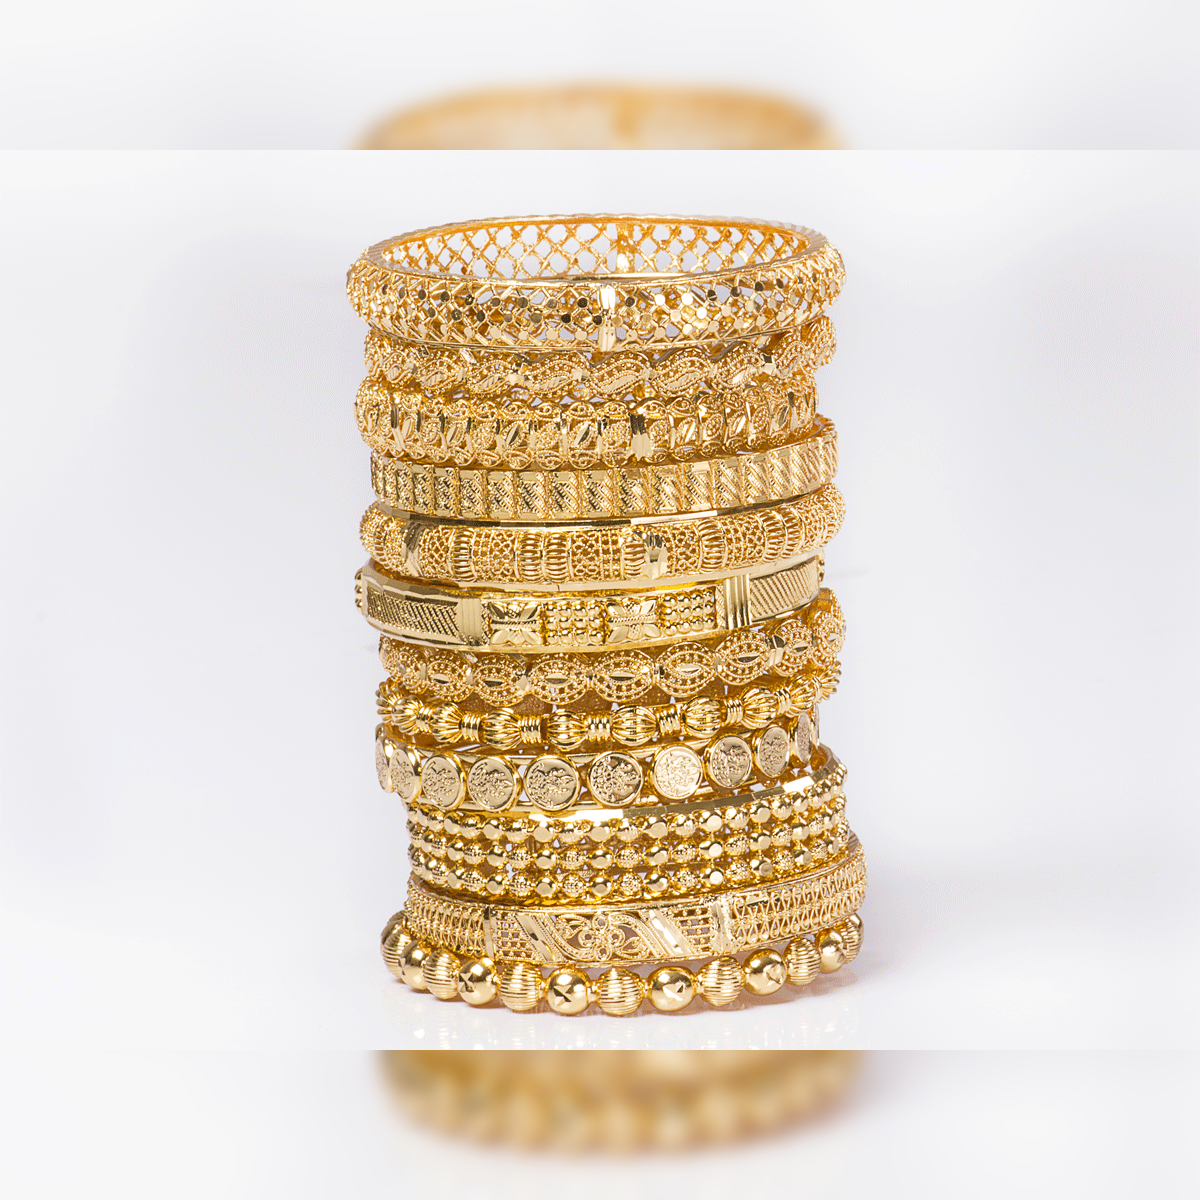 tanishq malabar gold joyalukkas kalyan jewellers all india gold jewellery rates of top branded jewellers today